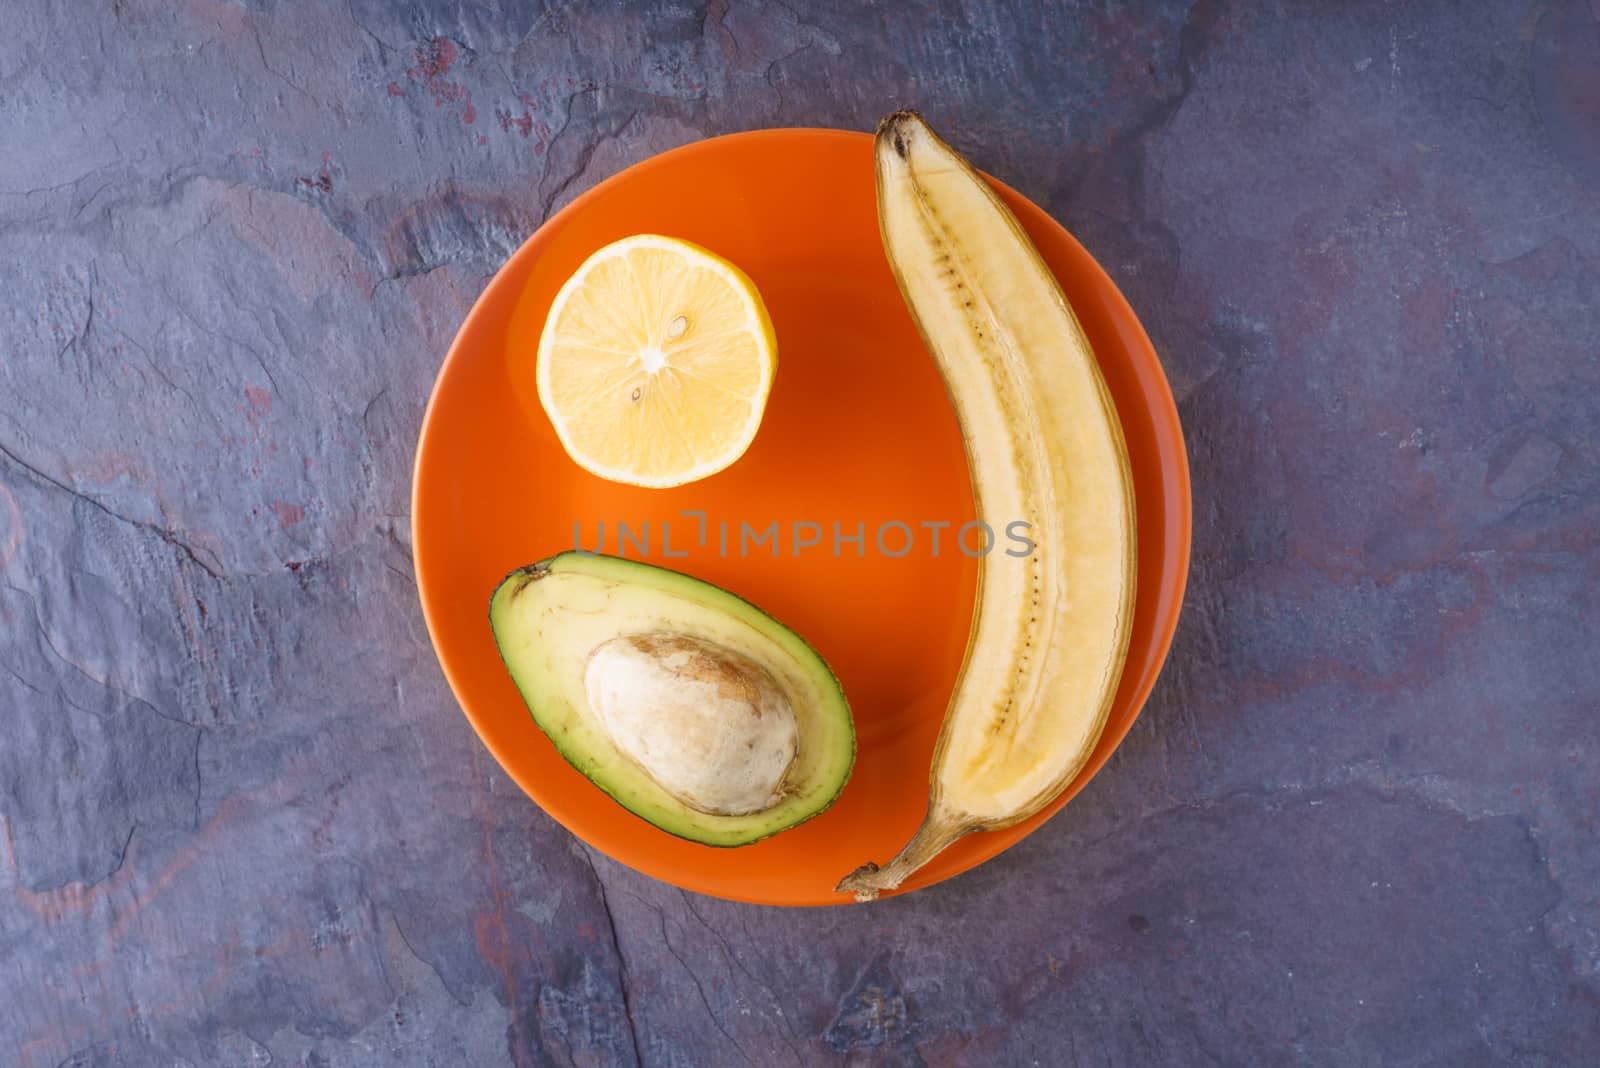 Tropical fruits on orange plate by Deniskarpenkov